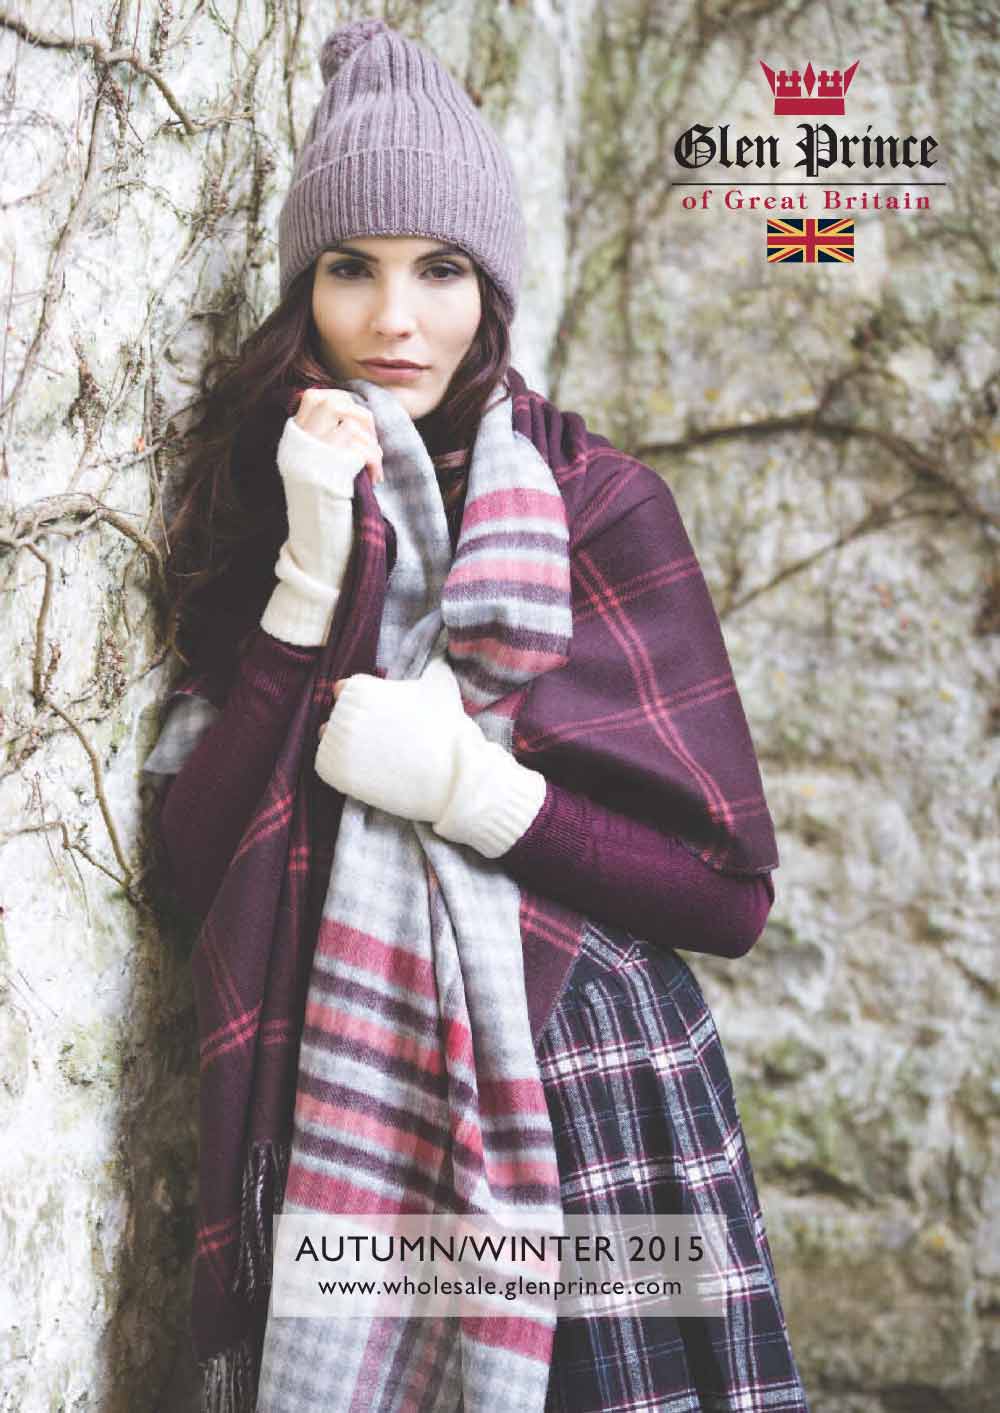 Glen Prince of Great Britain Autumn/ Winter 2015 brochure